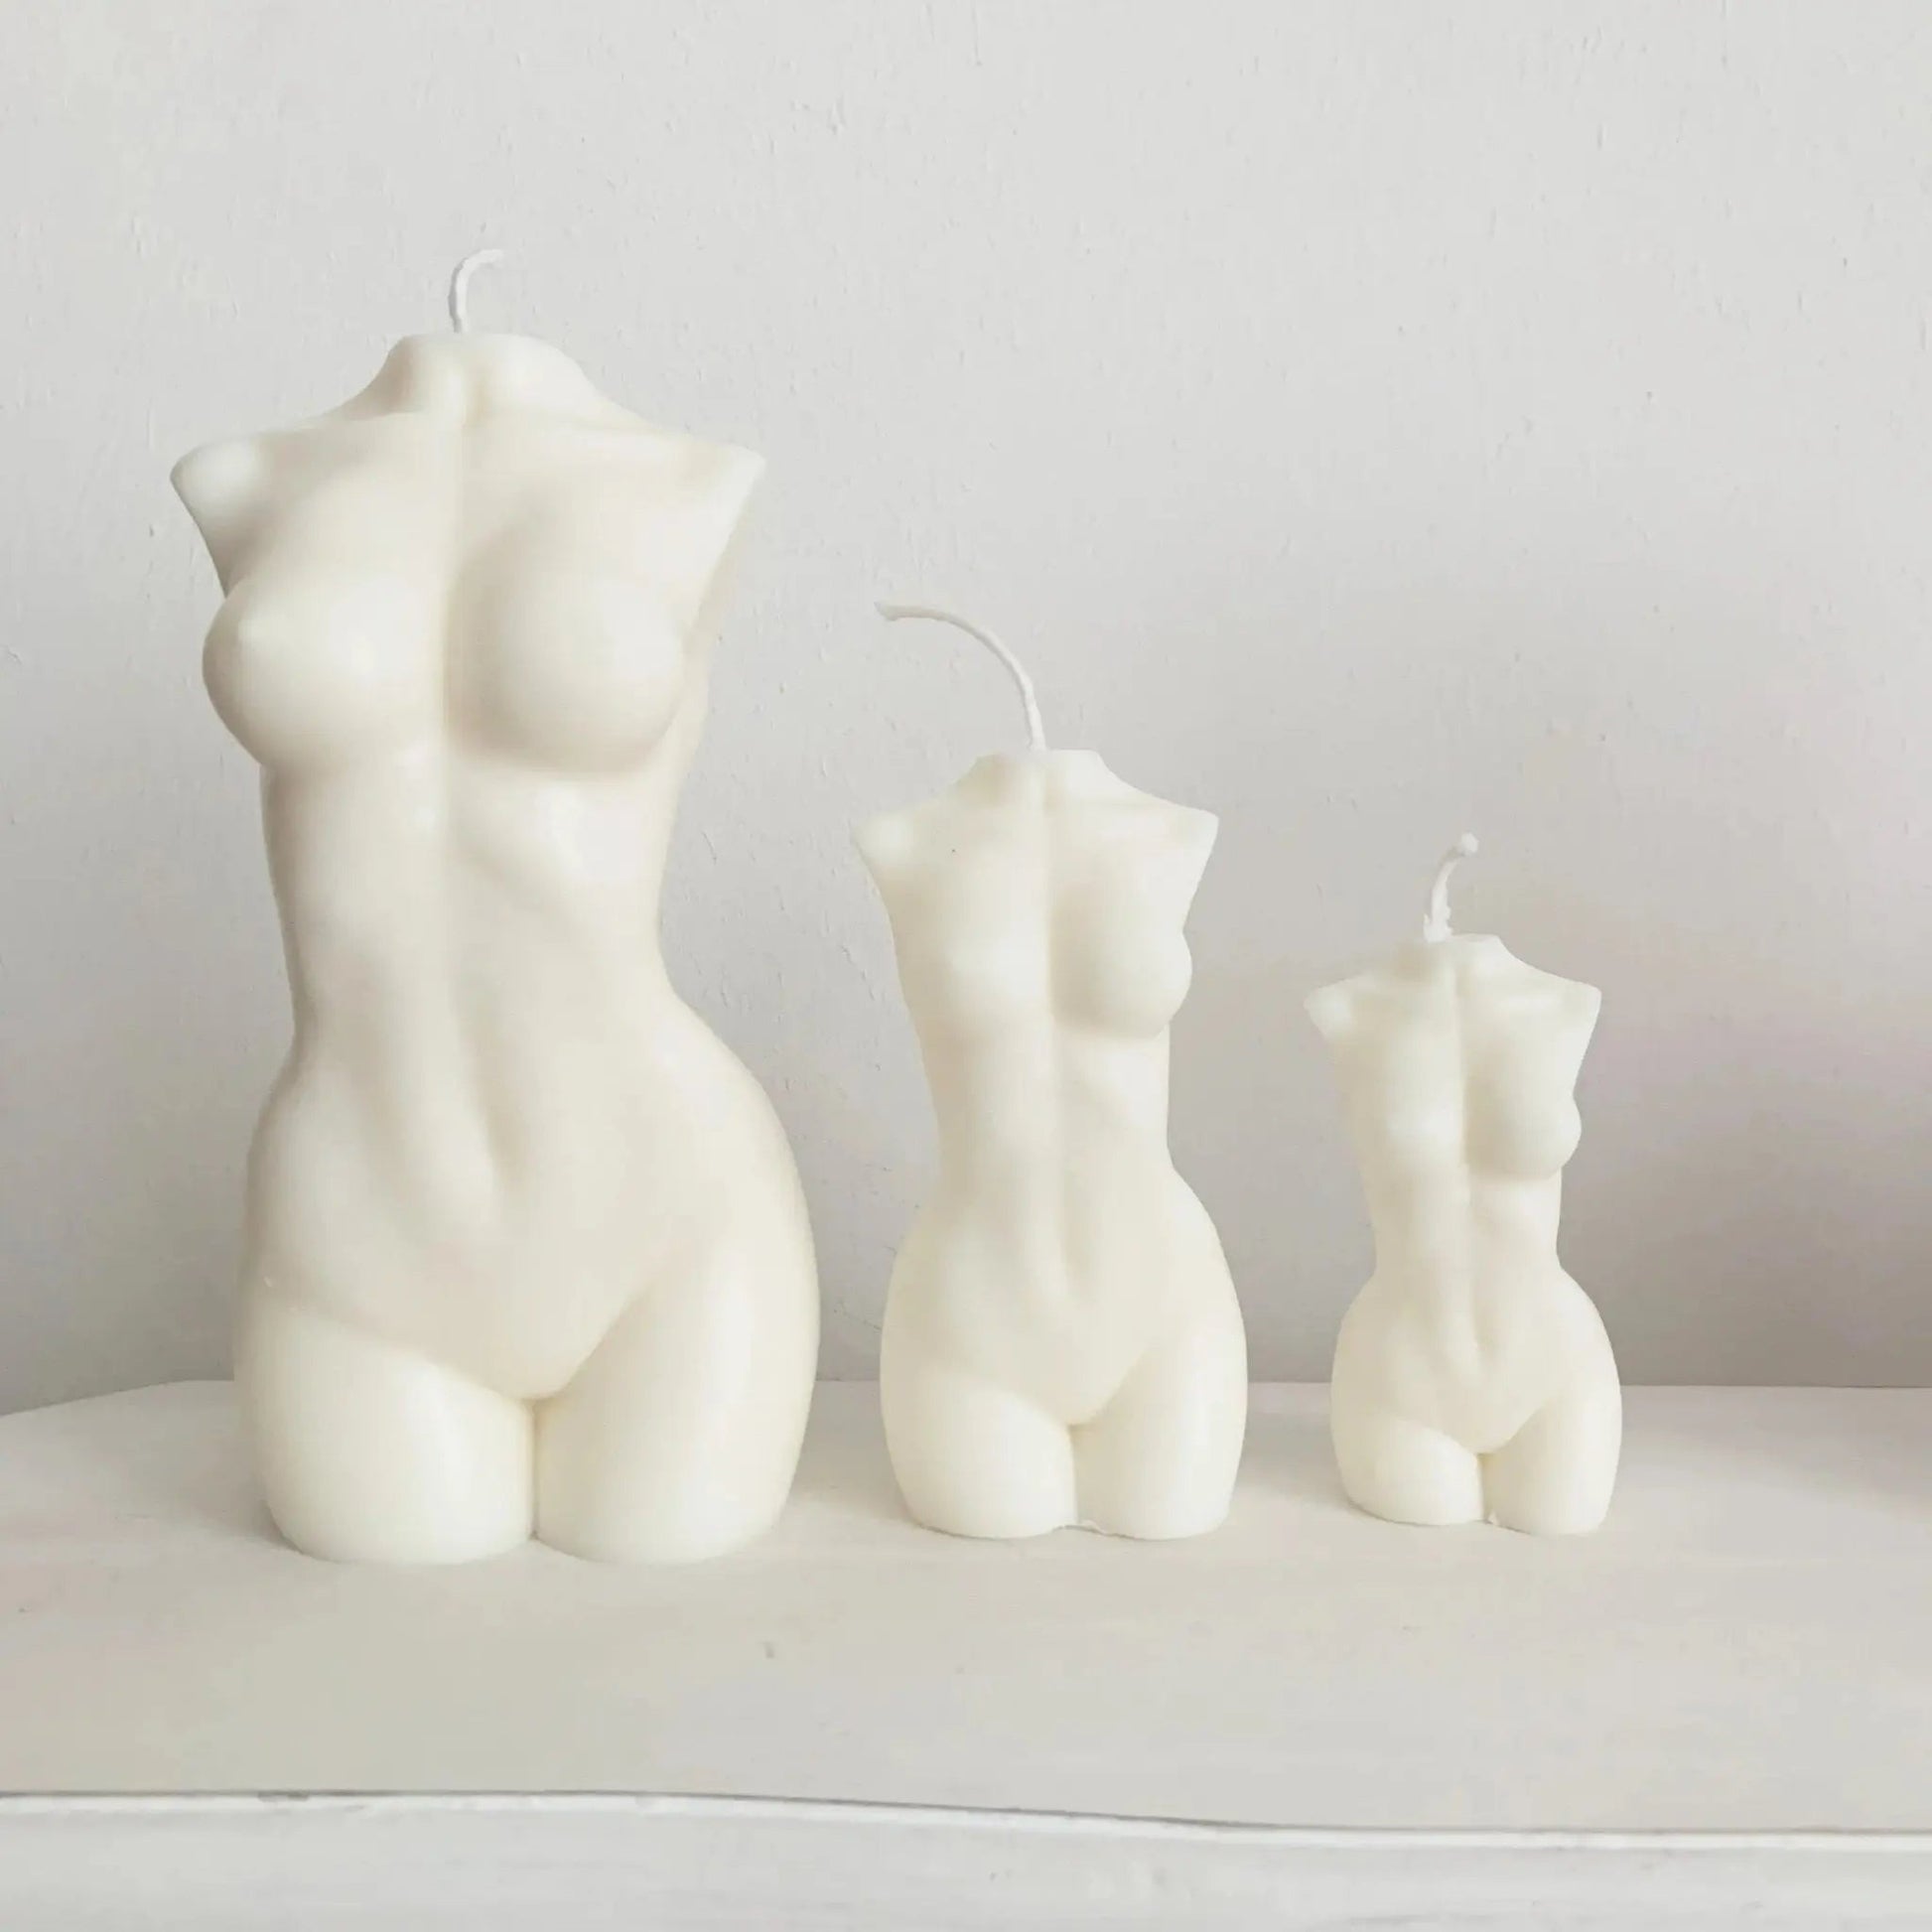 Frauenkörper Skulptur Kerze aus Soyawachs 20cm Knocknok